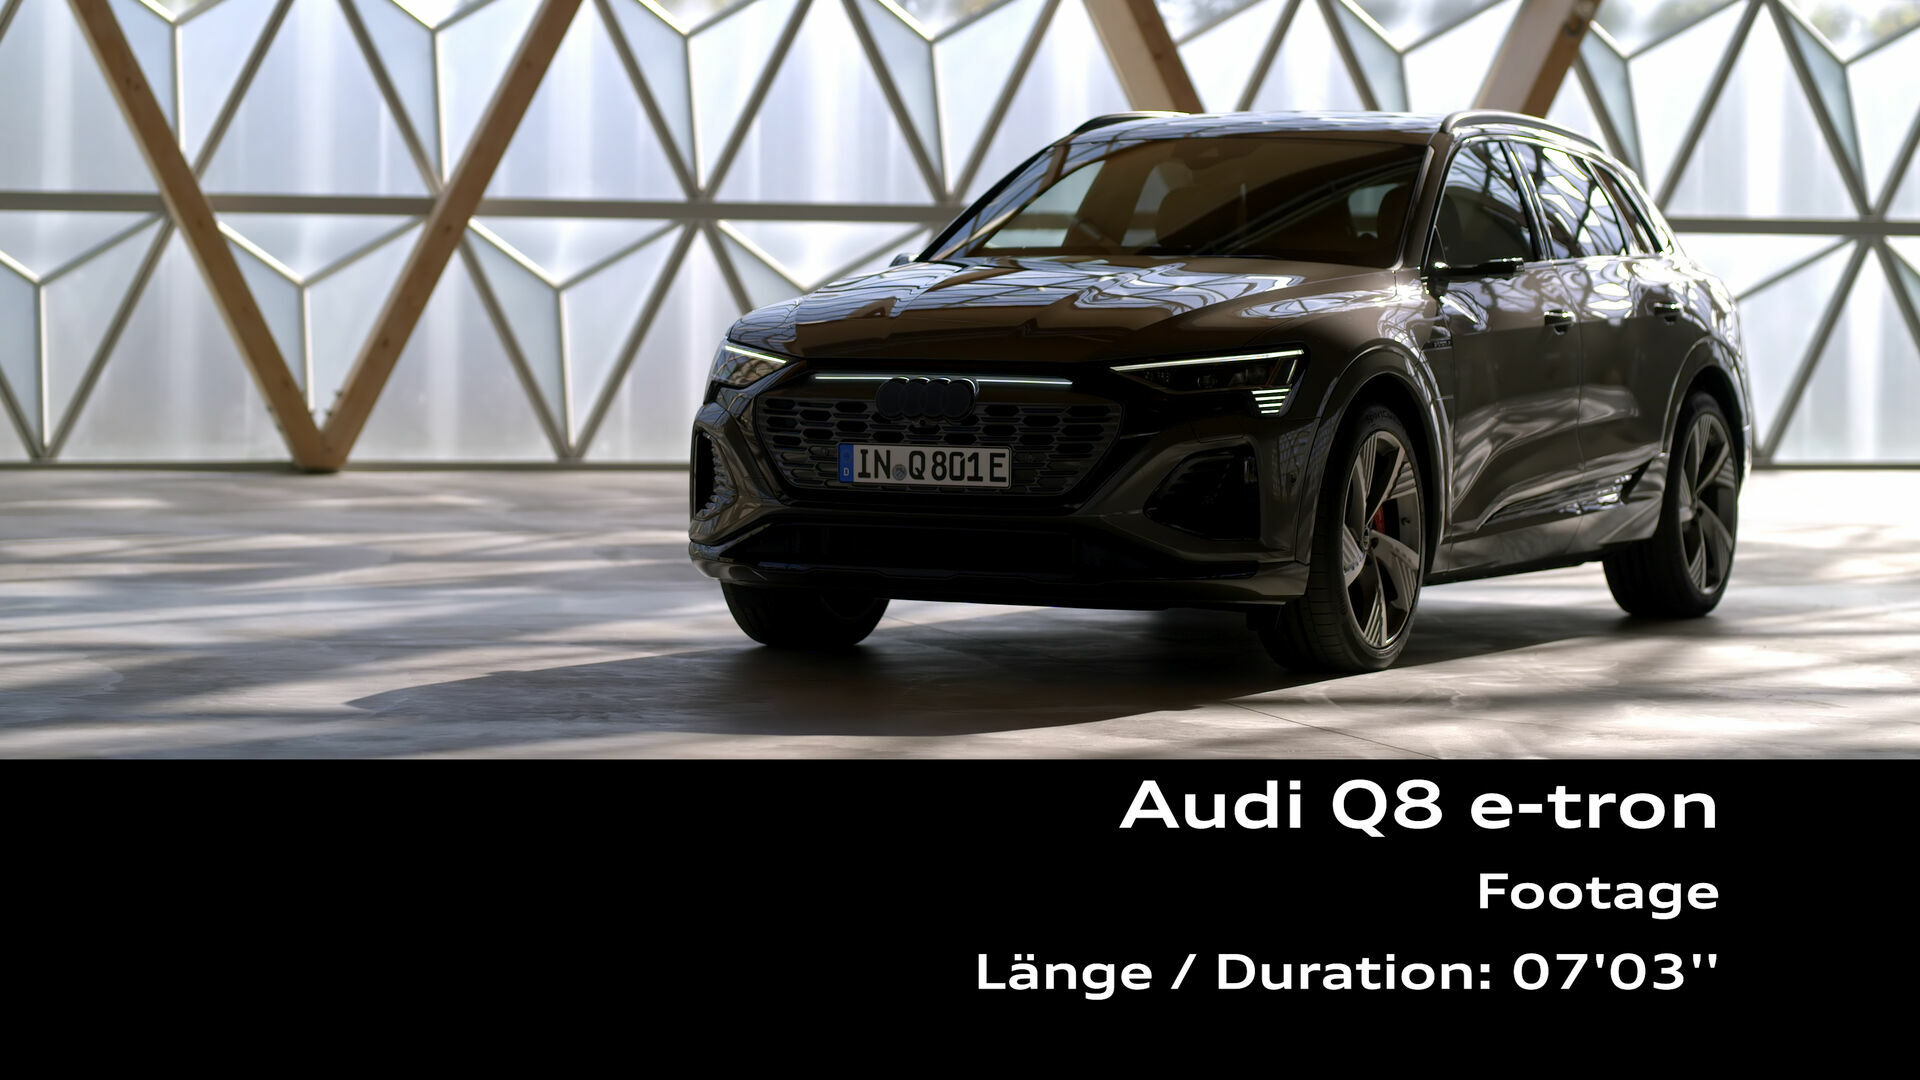 Footage: Audi Q8 e-tron